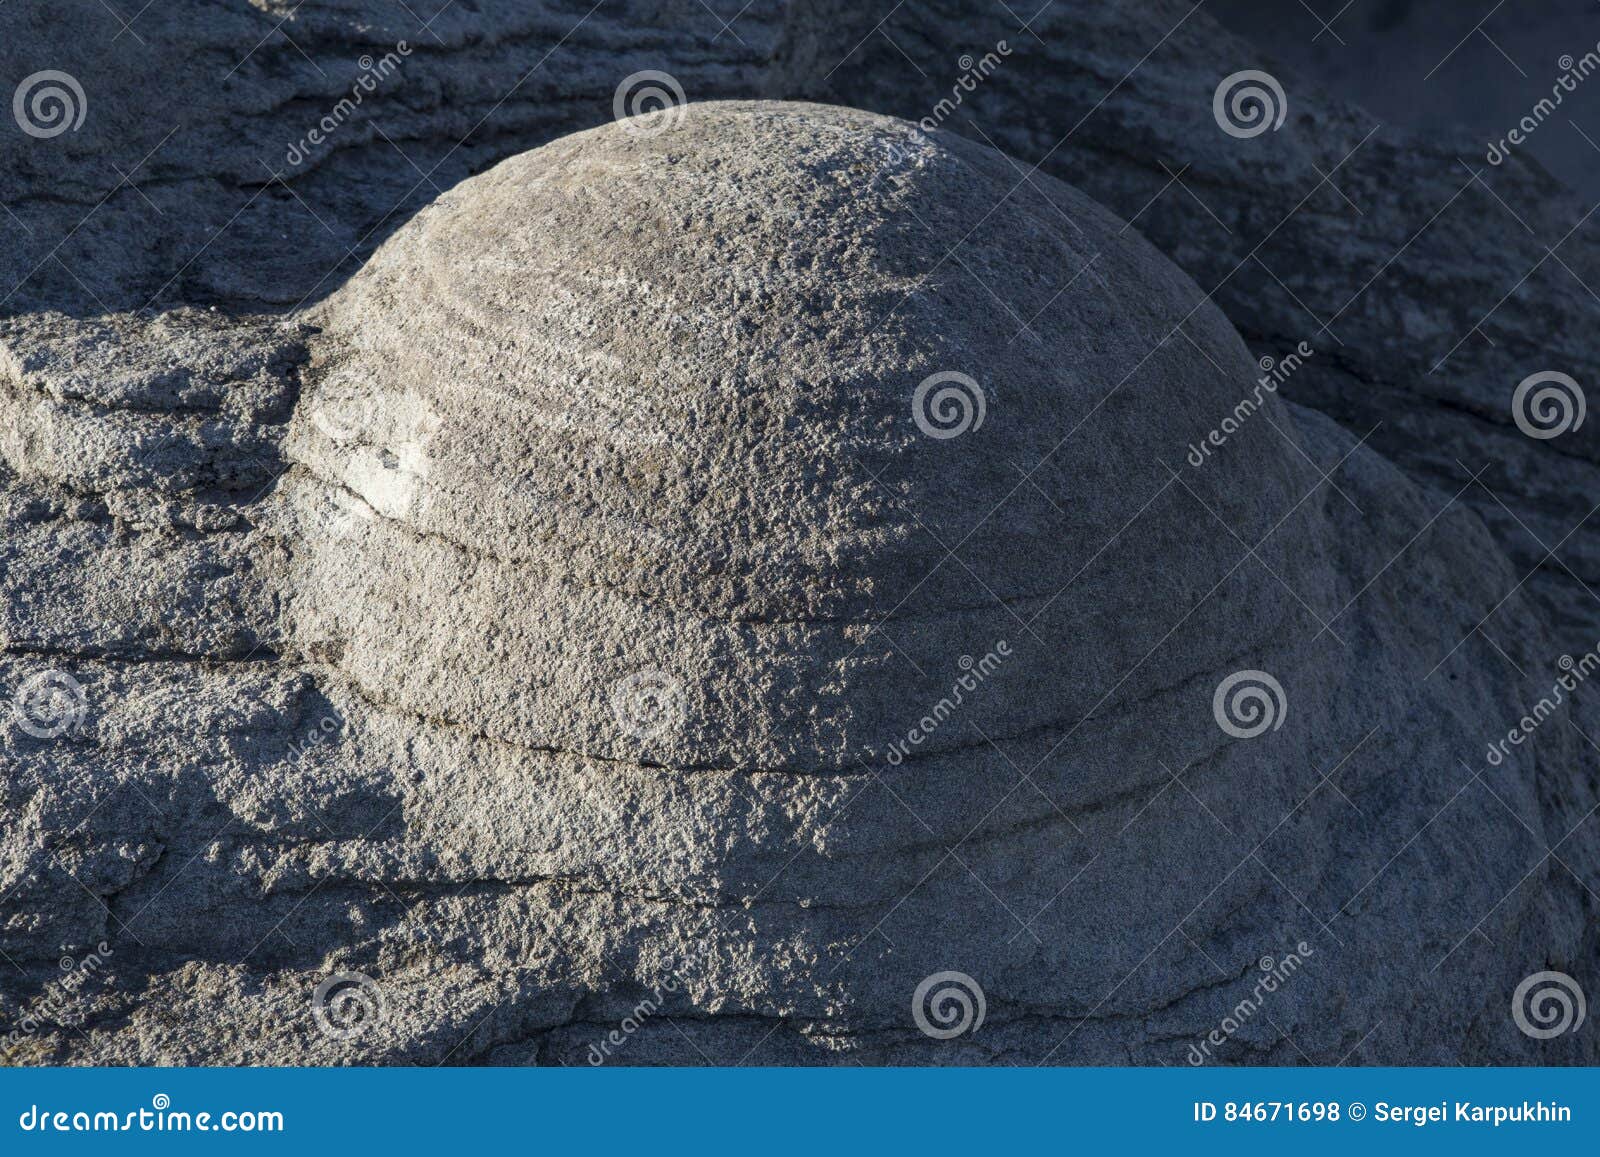 large spherical nodule of sandstone.